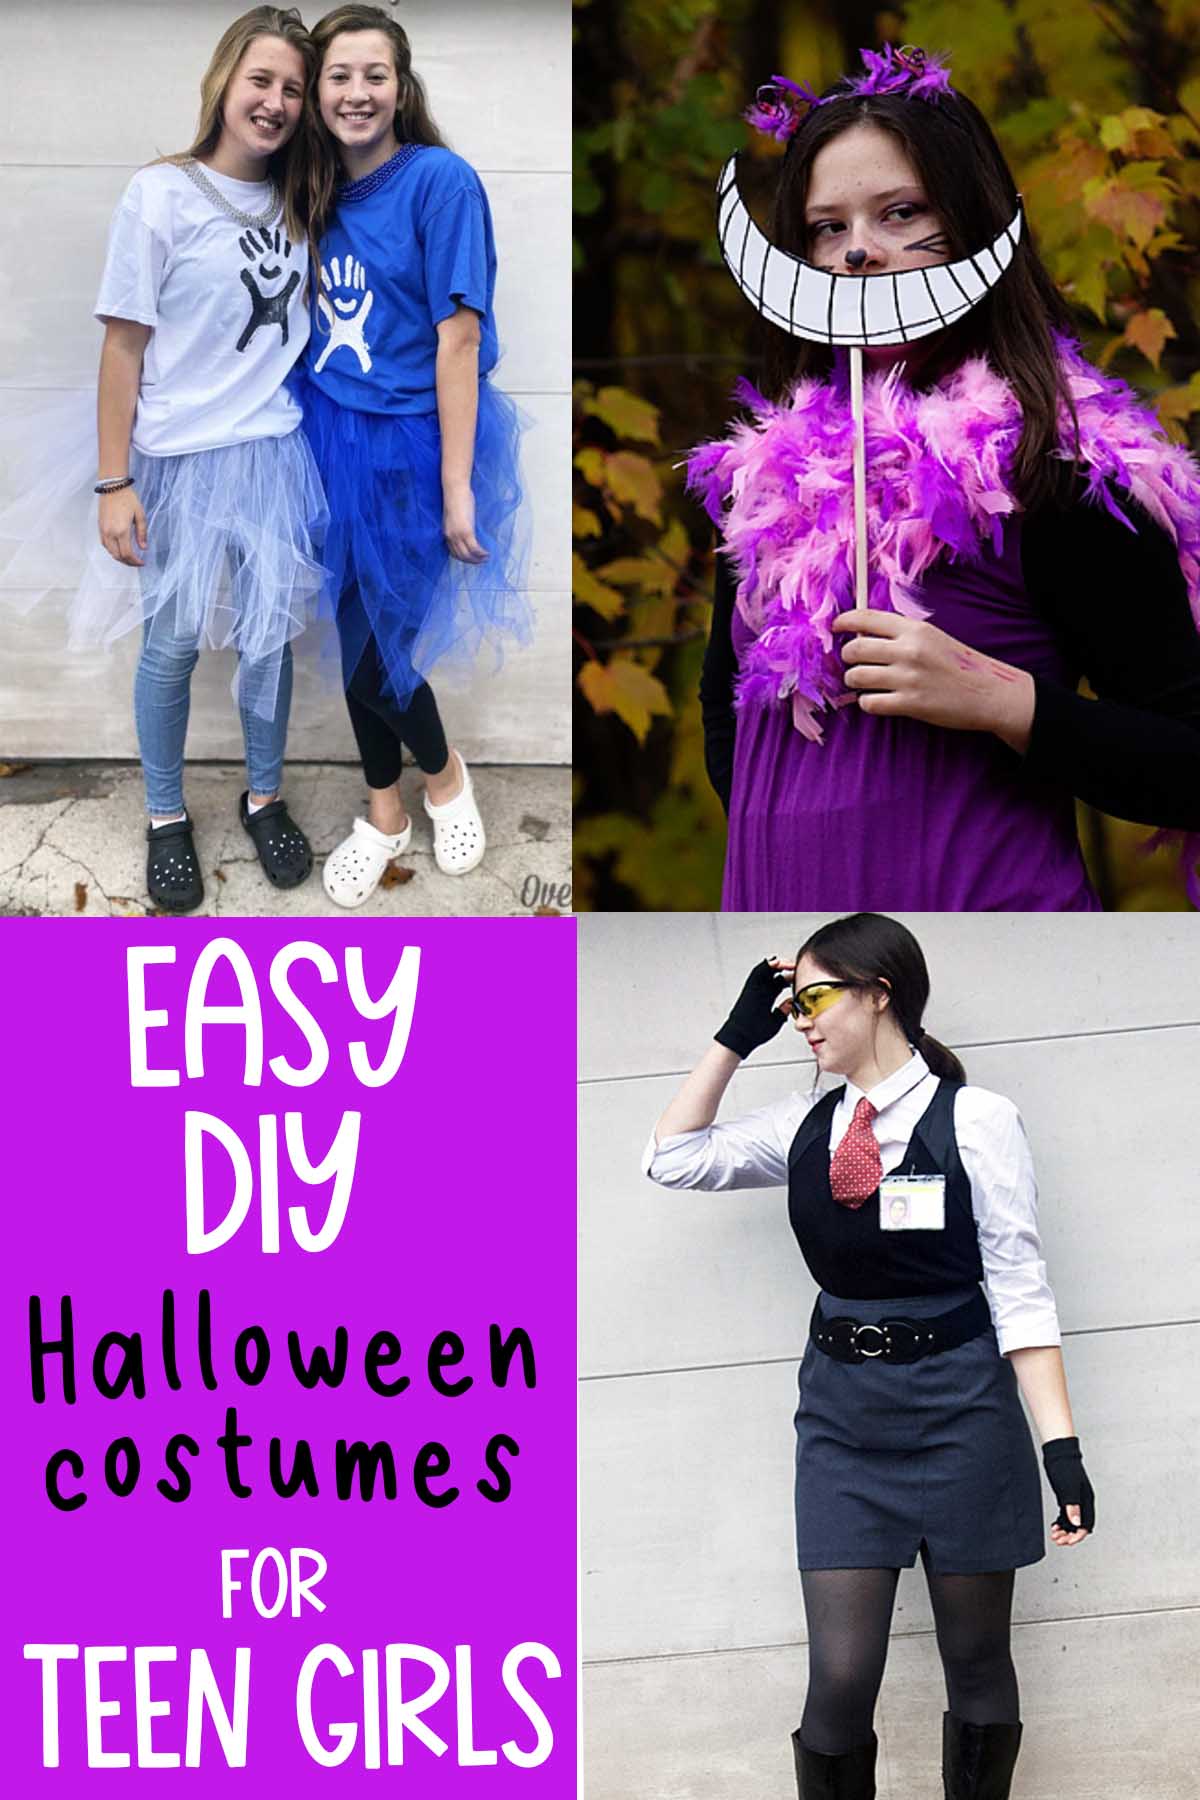 homemade costume ideas for teenage girls